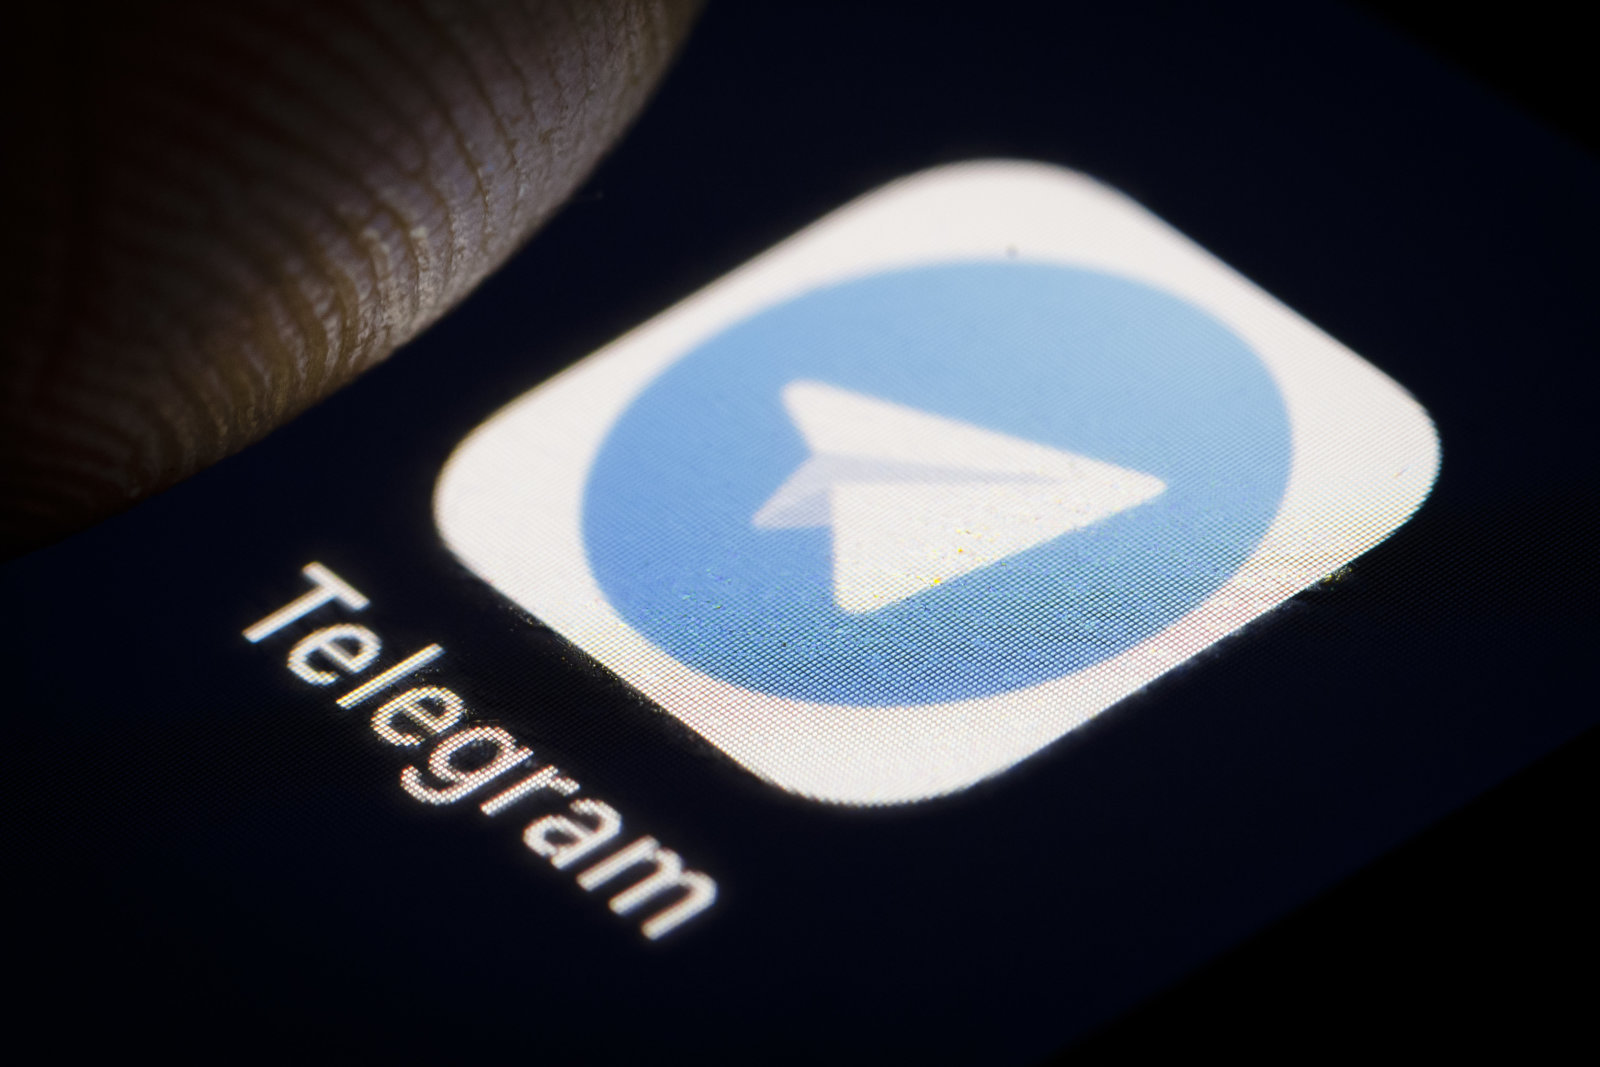 Telegram Appeals Court Decision That Restricts GRAM Token Distribution